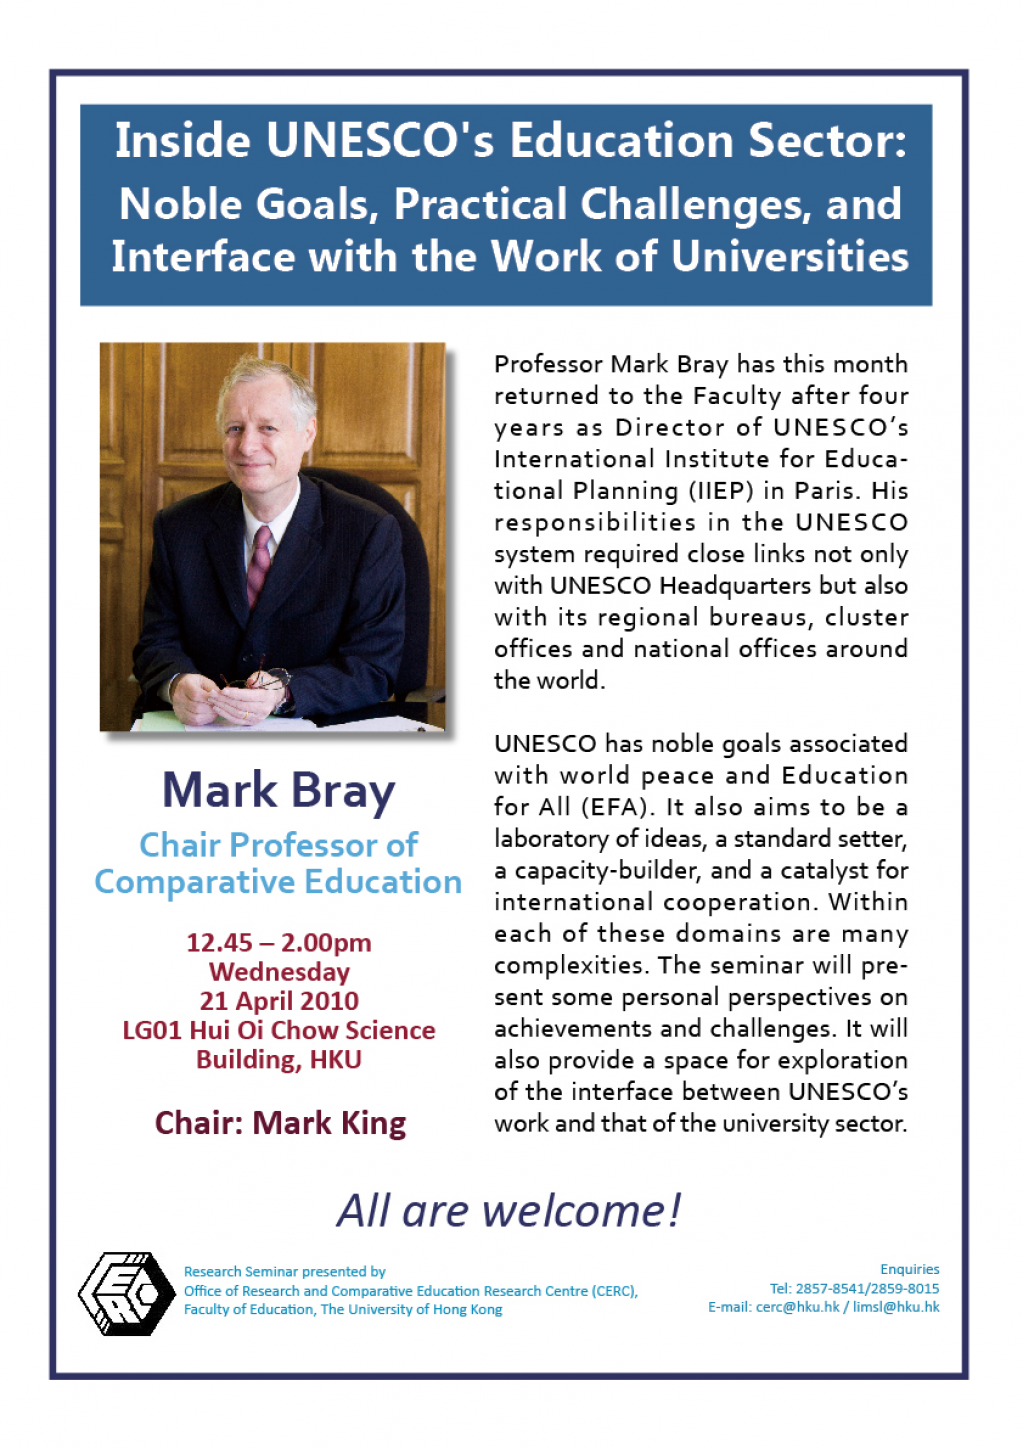 Seminar by Mark Bray - Inside UNESCO's Education Sector